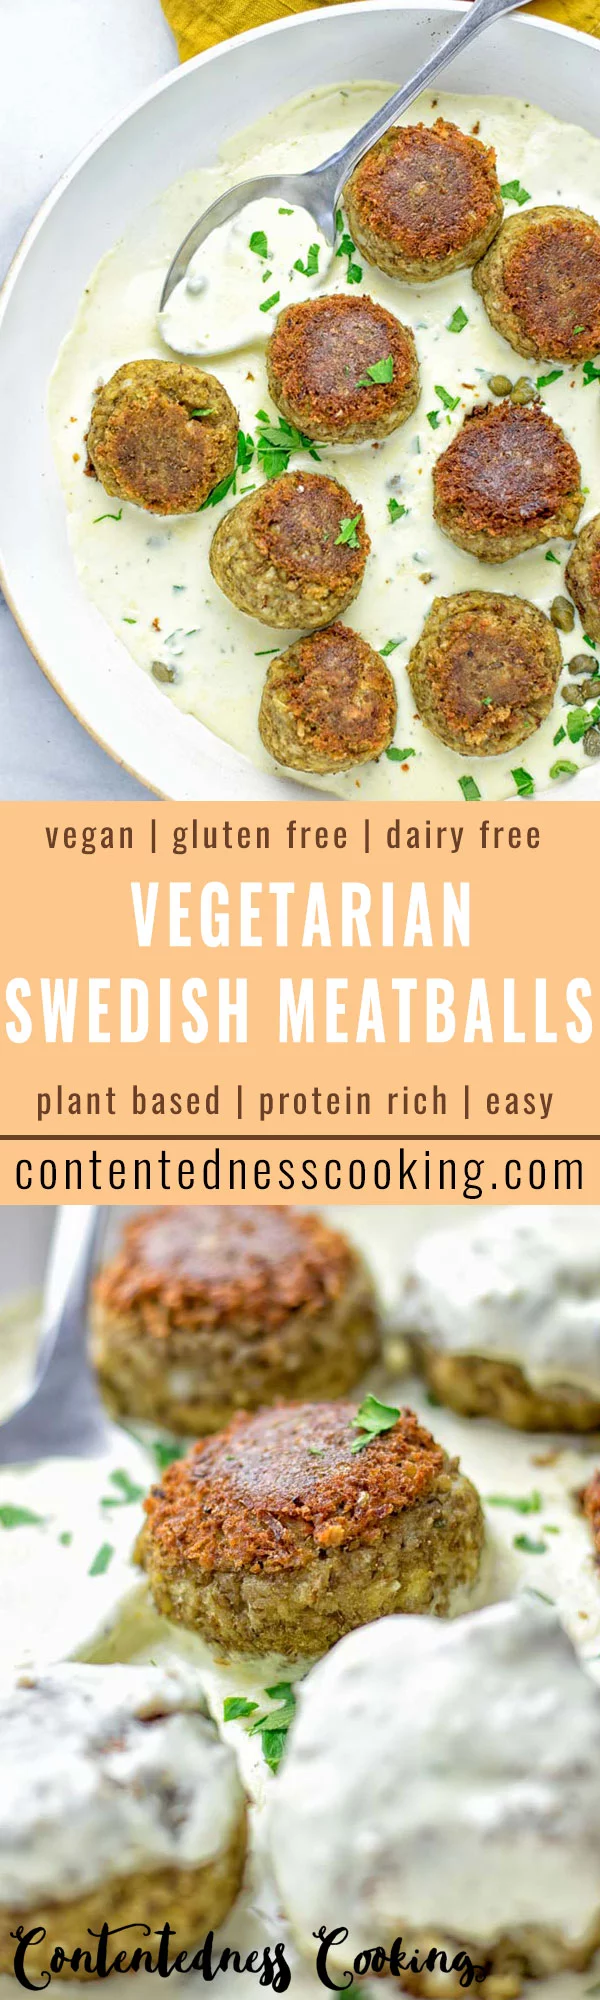 Vegetarian Swedish Meatballs | #vegan #contentednesscooking #glutenfree #yum